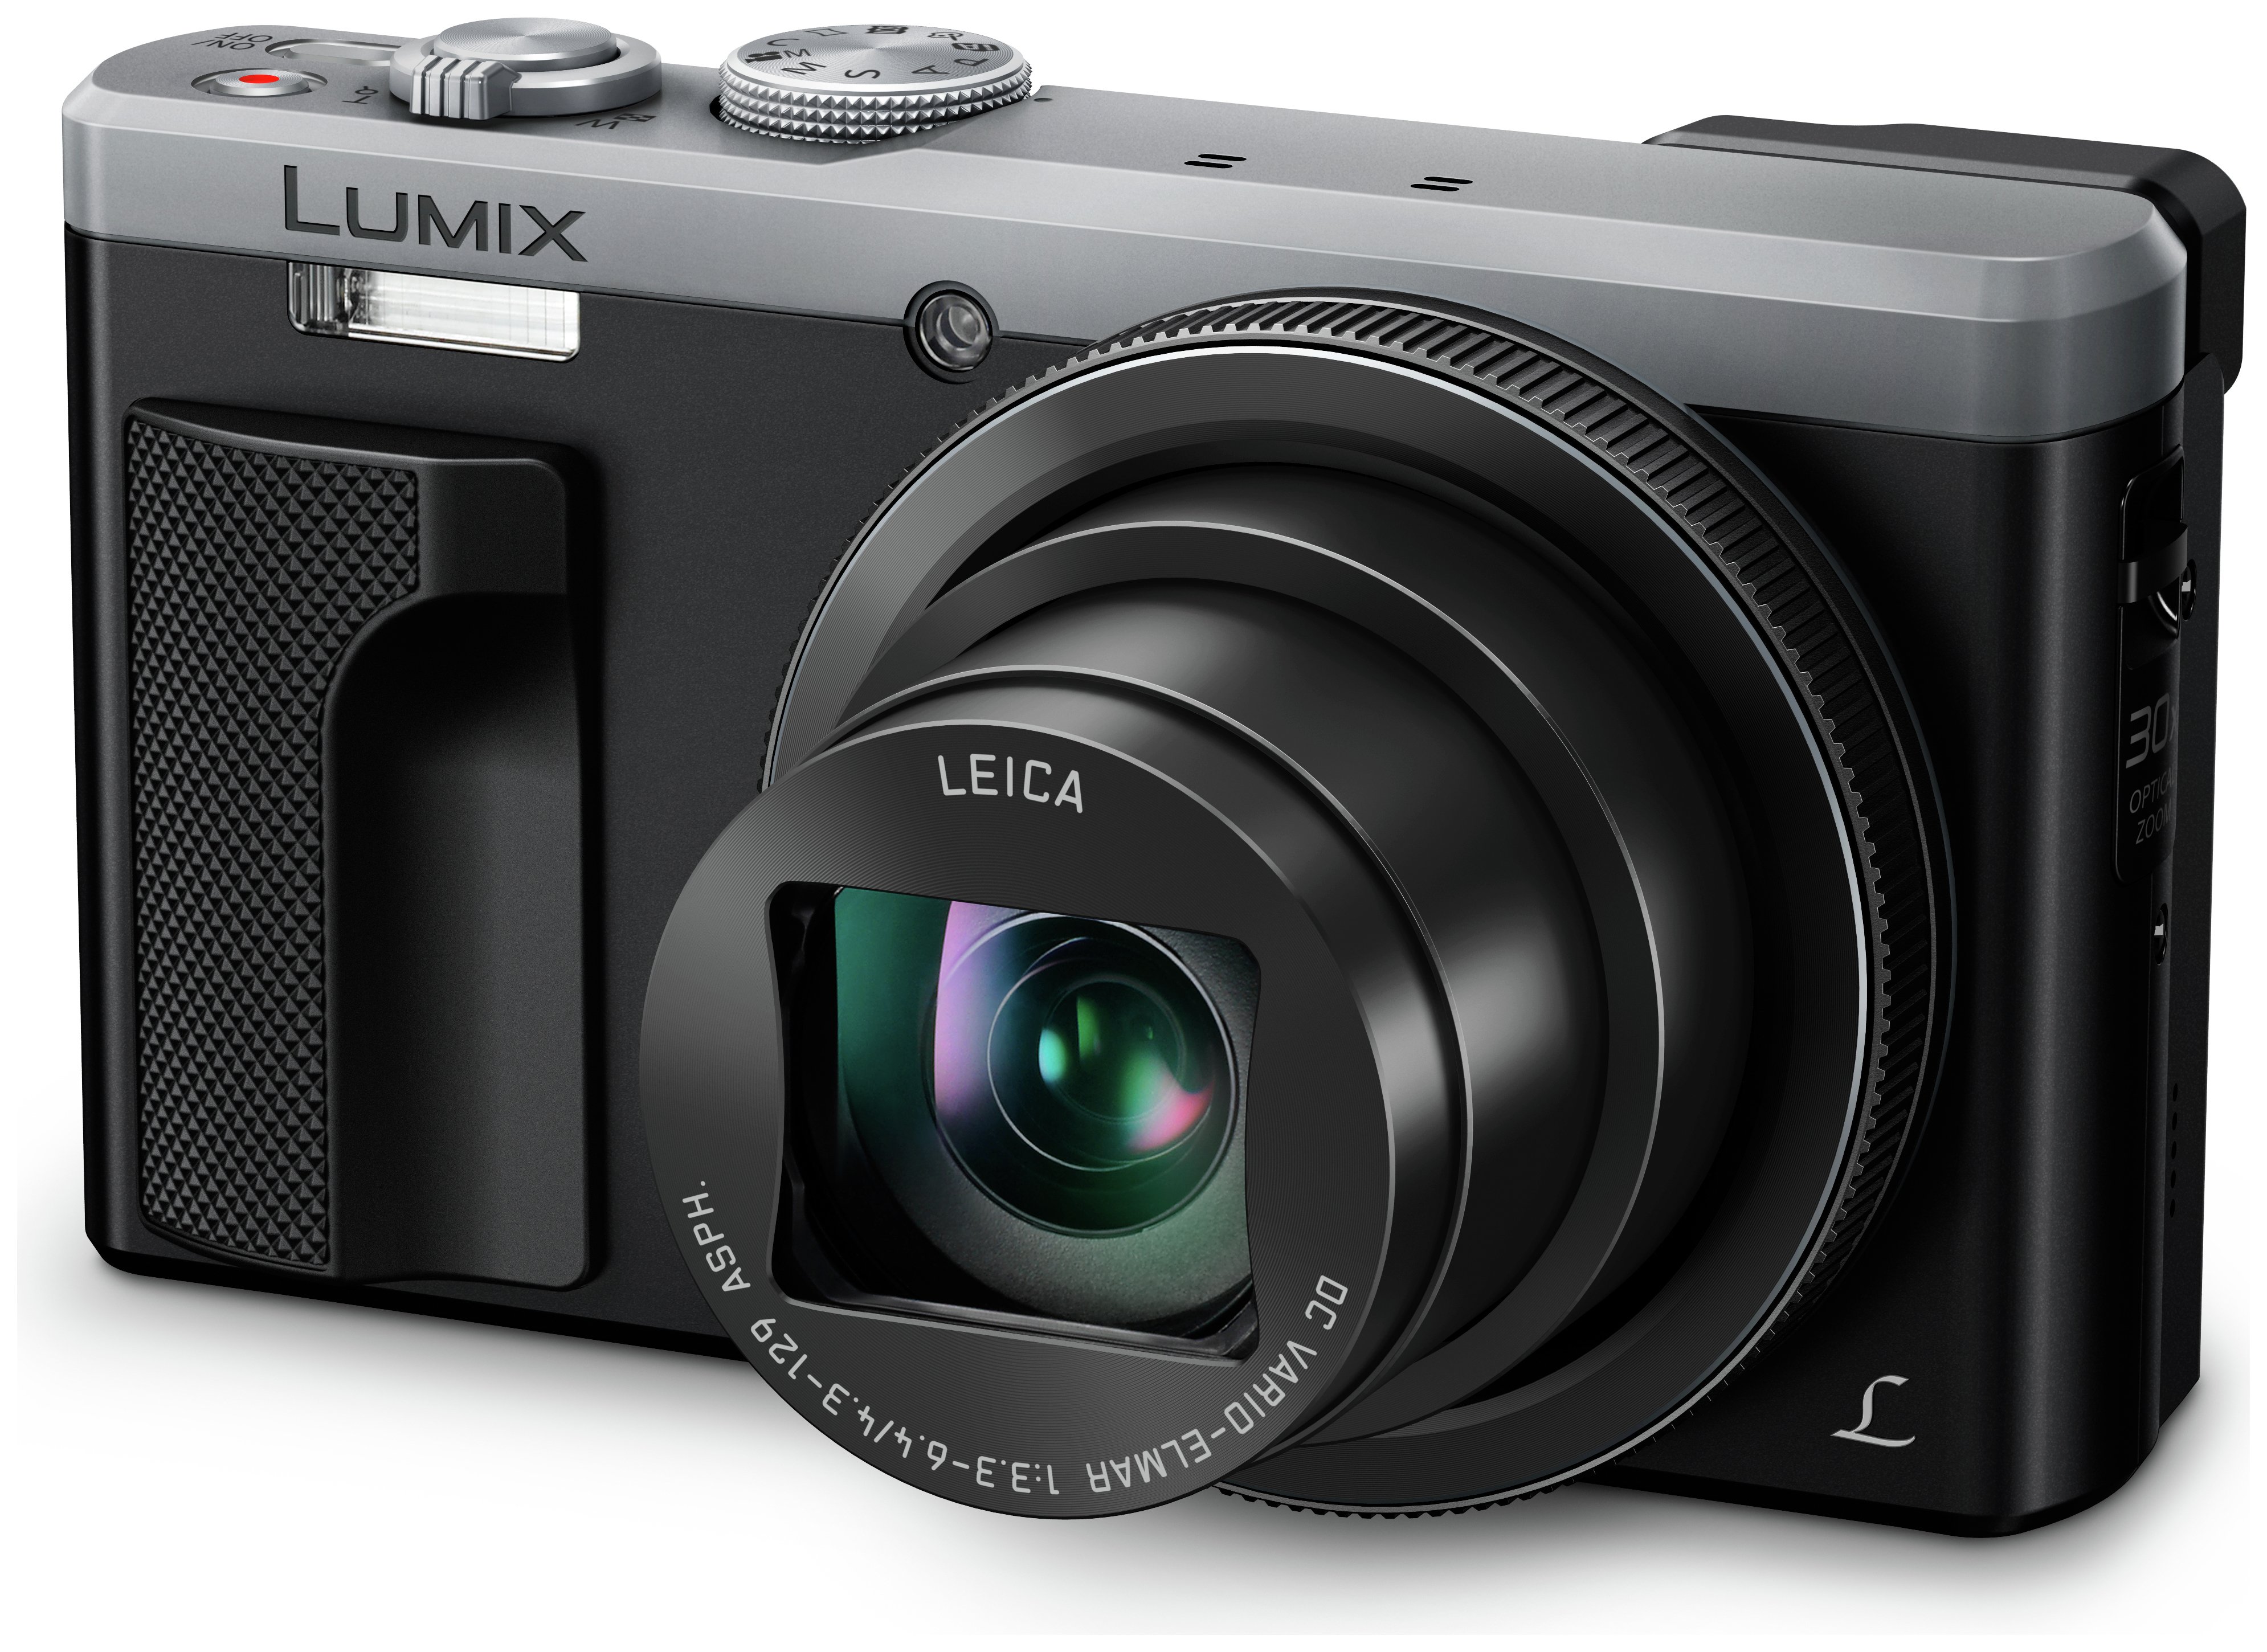 Panasonic Lumix DMC-TZ80EB-S Superzoom Compact Camera Black Review